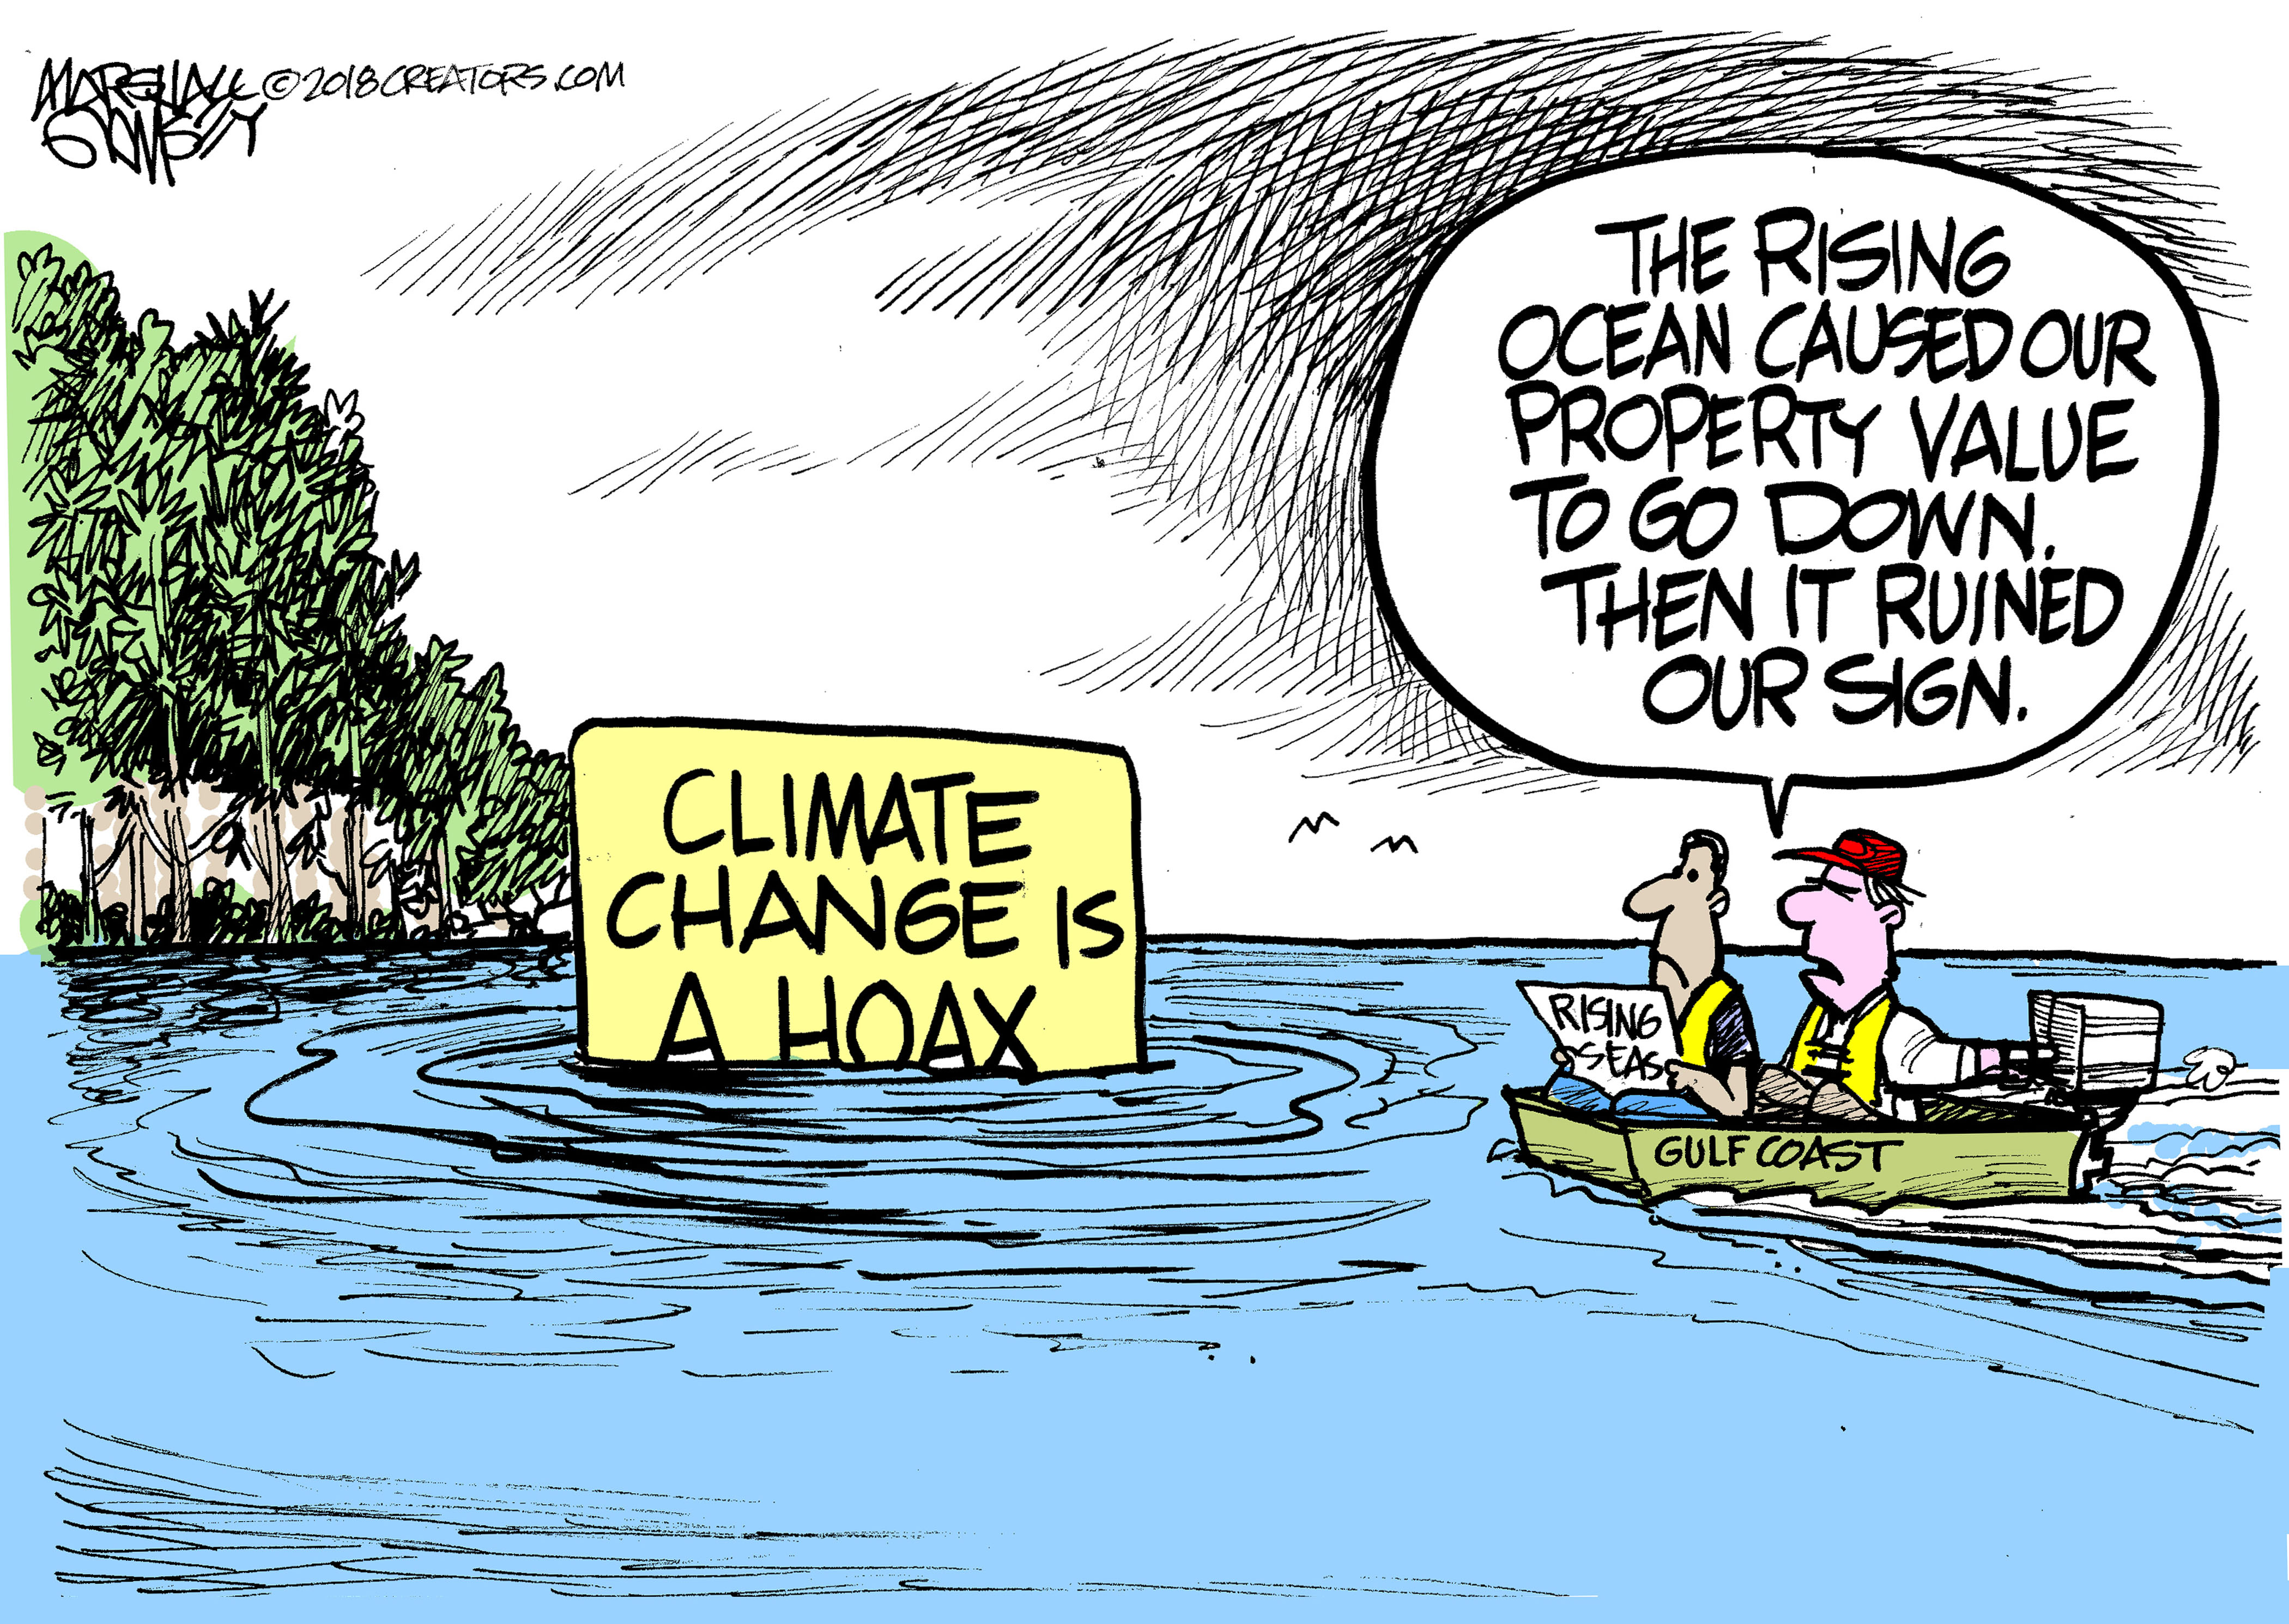 Editorial cartoon . Gulf Coast climate change hoax rising ocean levels  property value decline